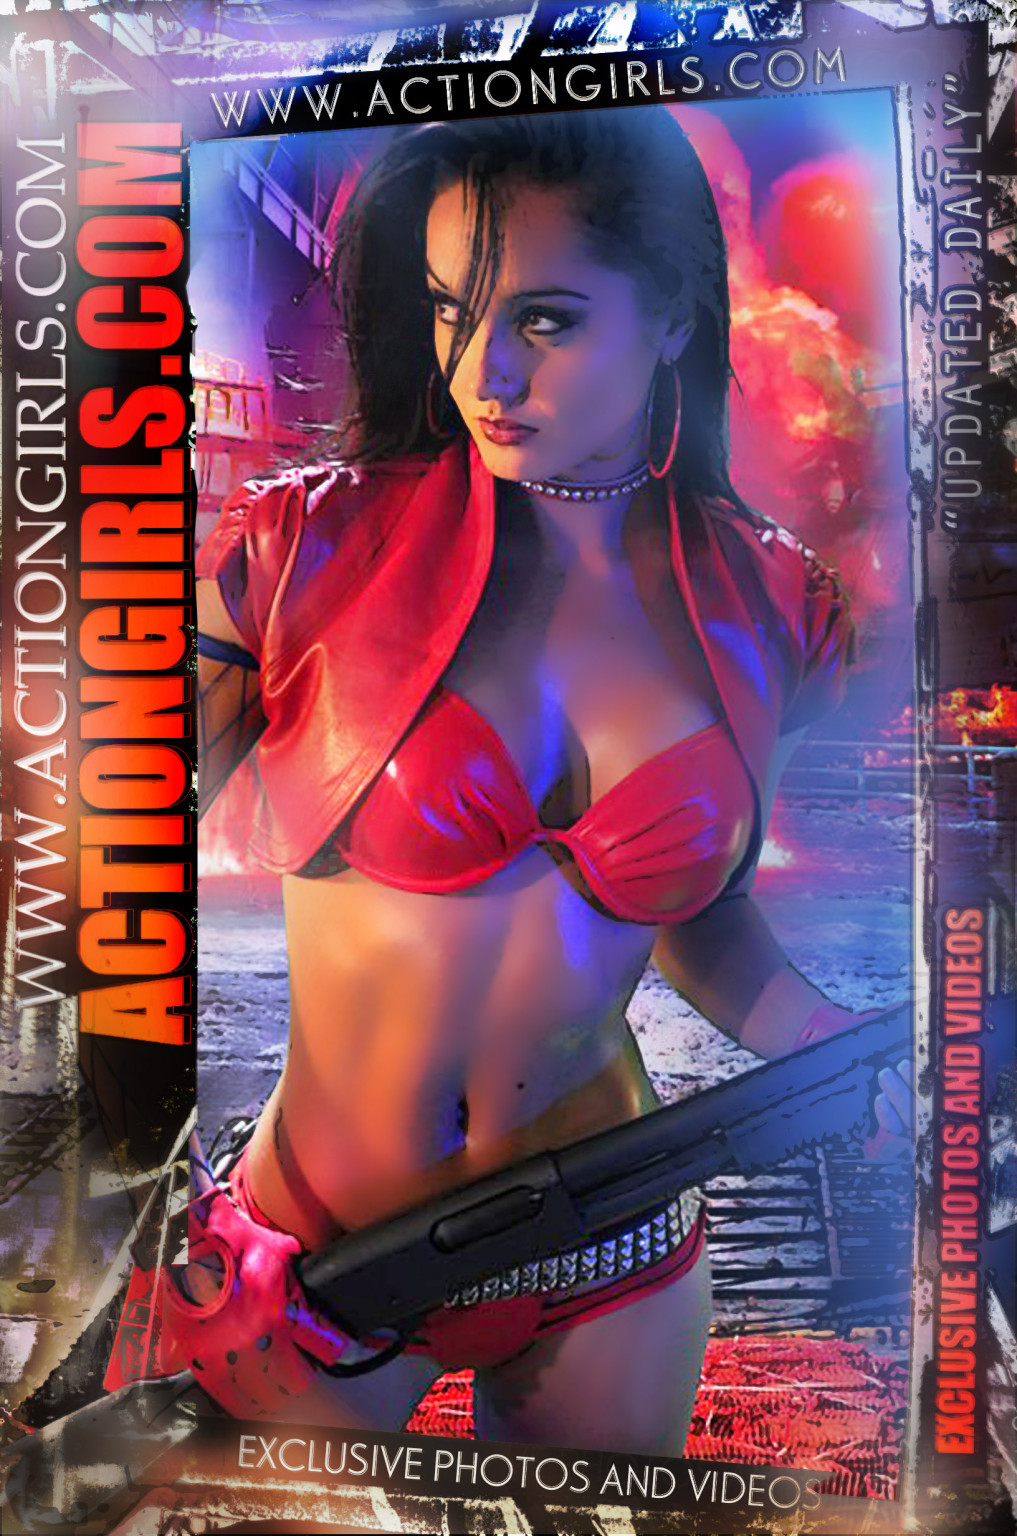 Esclusivo actiongirls web poster serie foto actiongirlscom
 #70957149